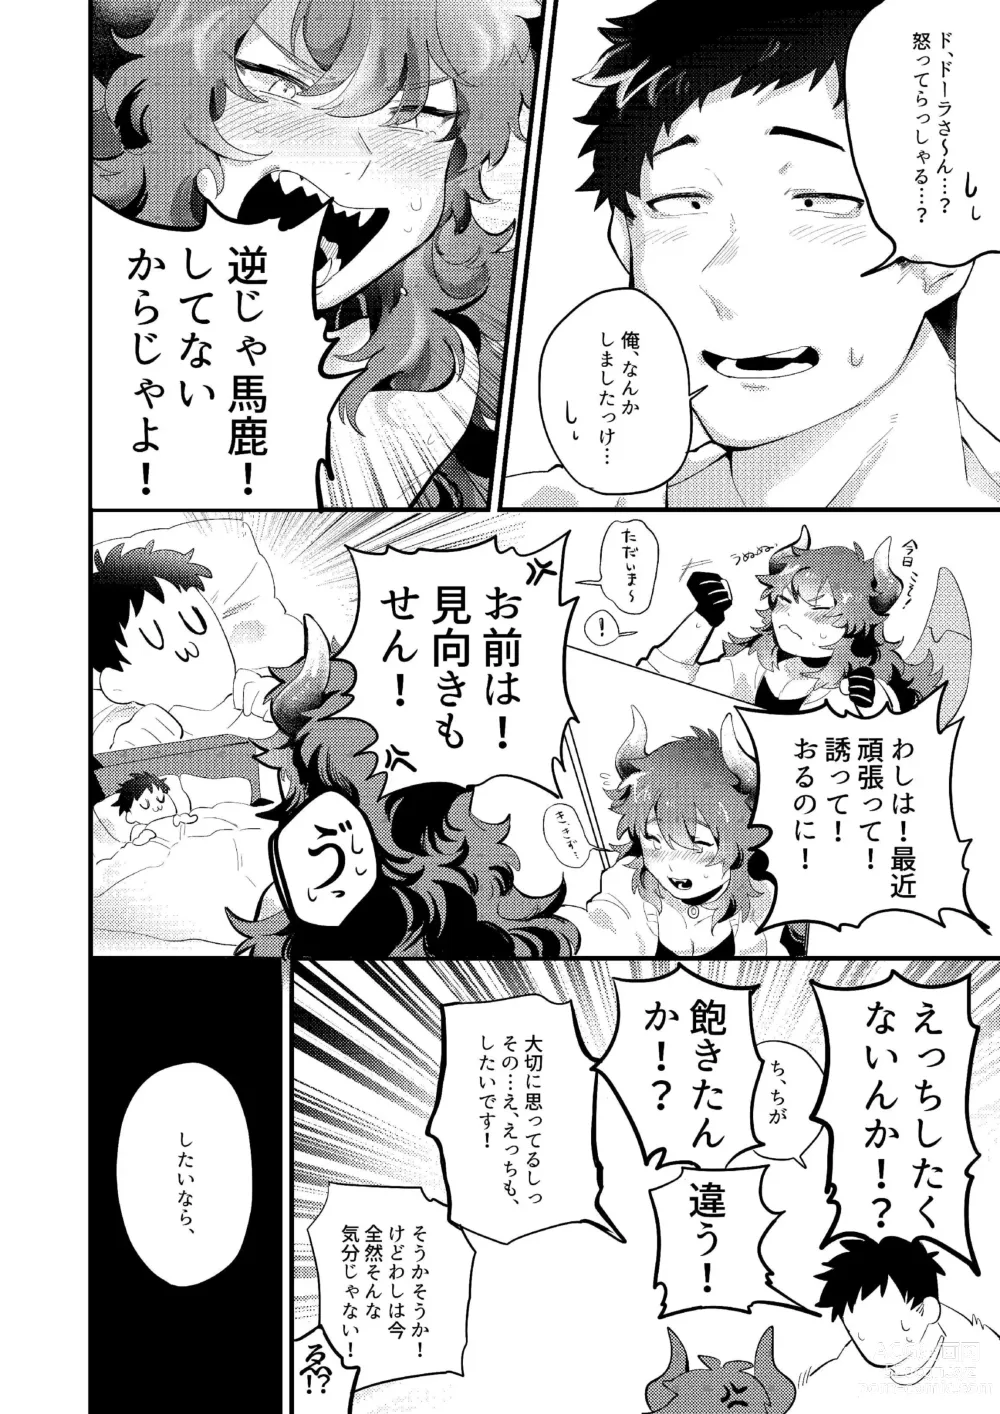 Page 5 of doujinshi Kamatte!!!